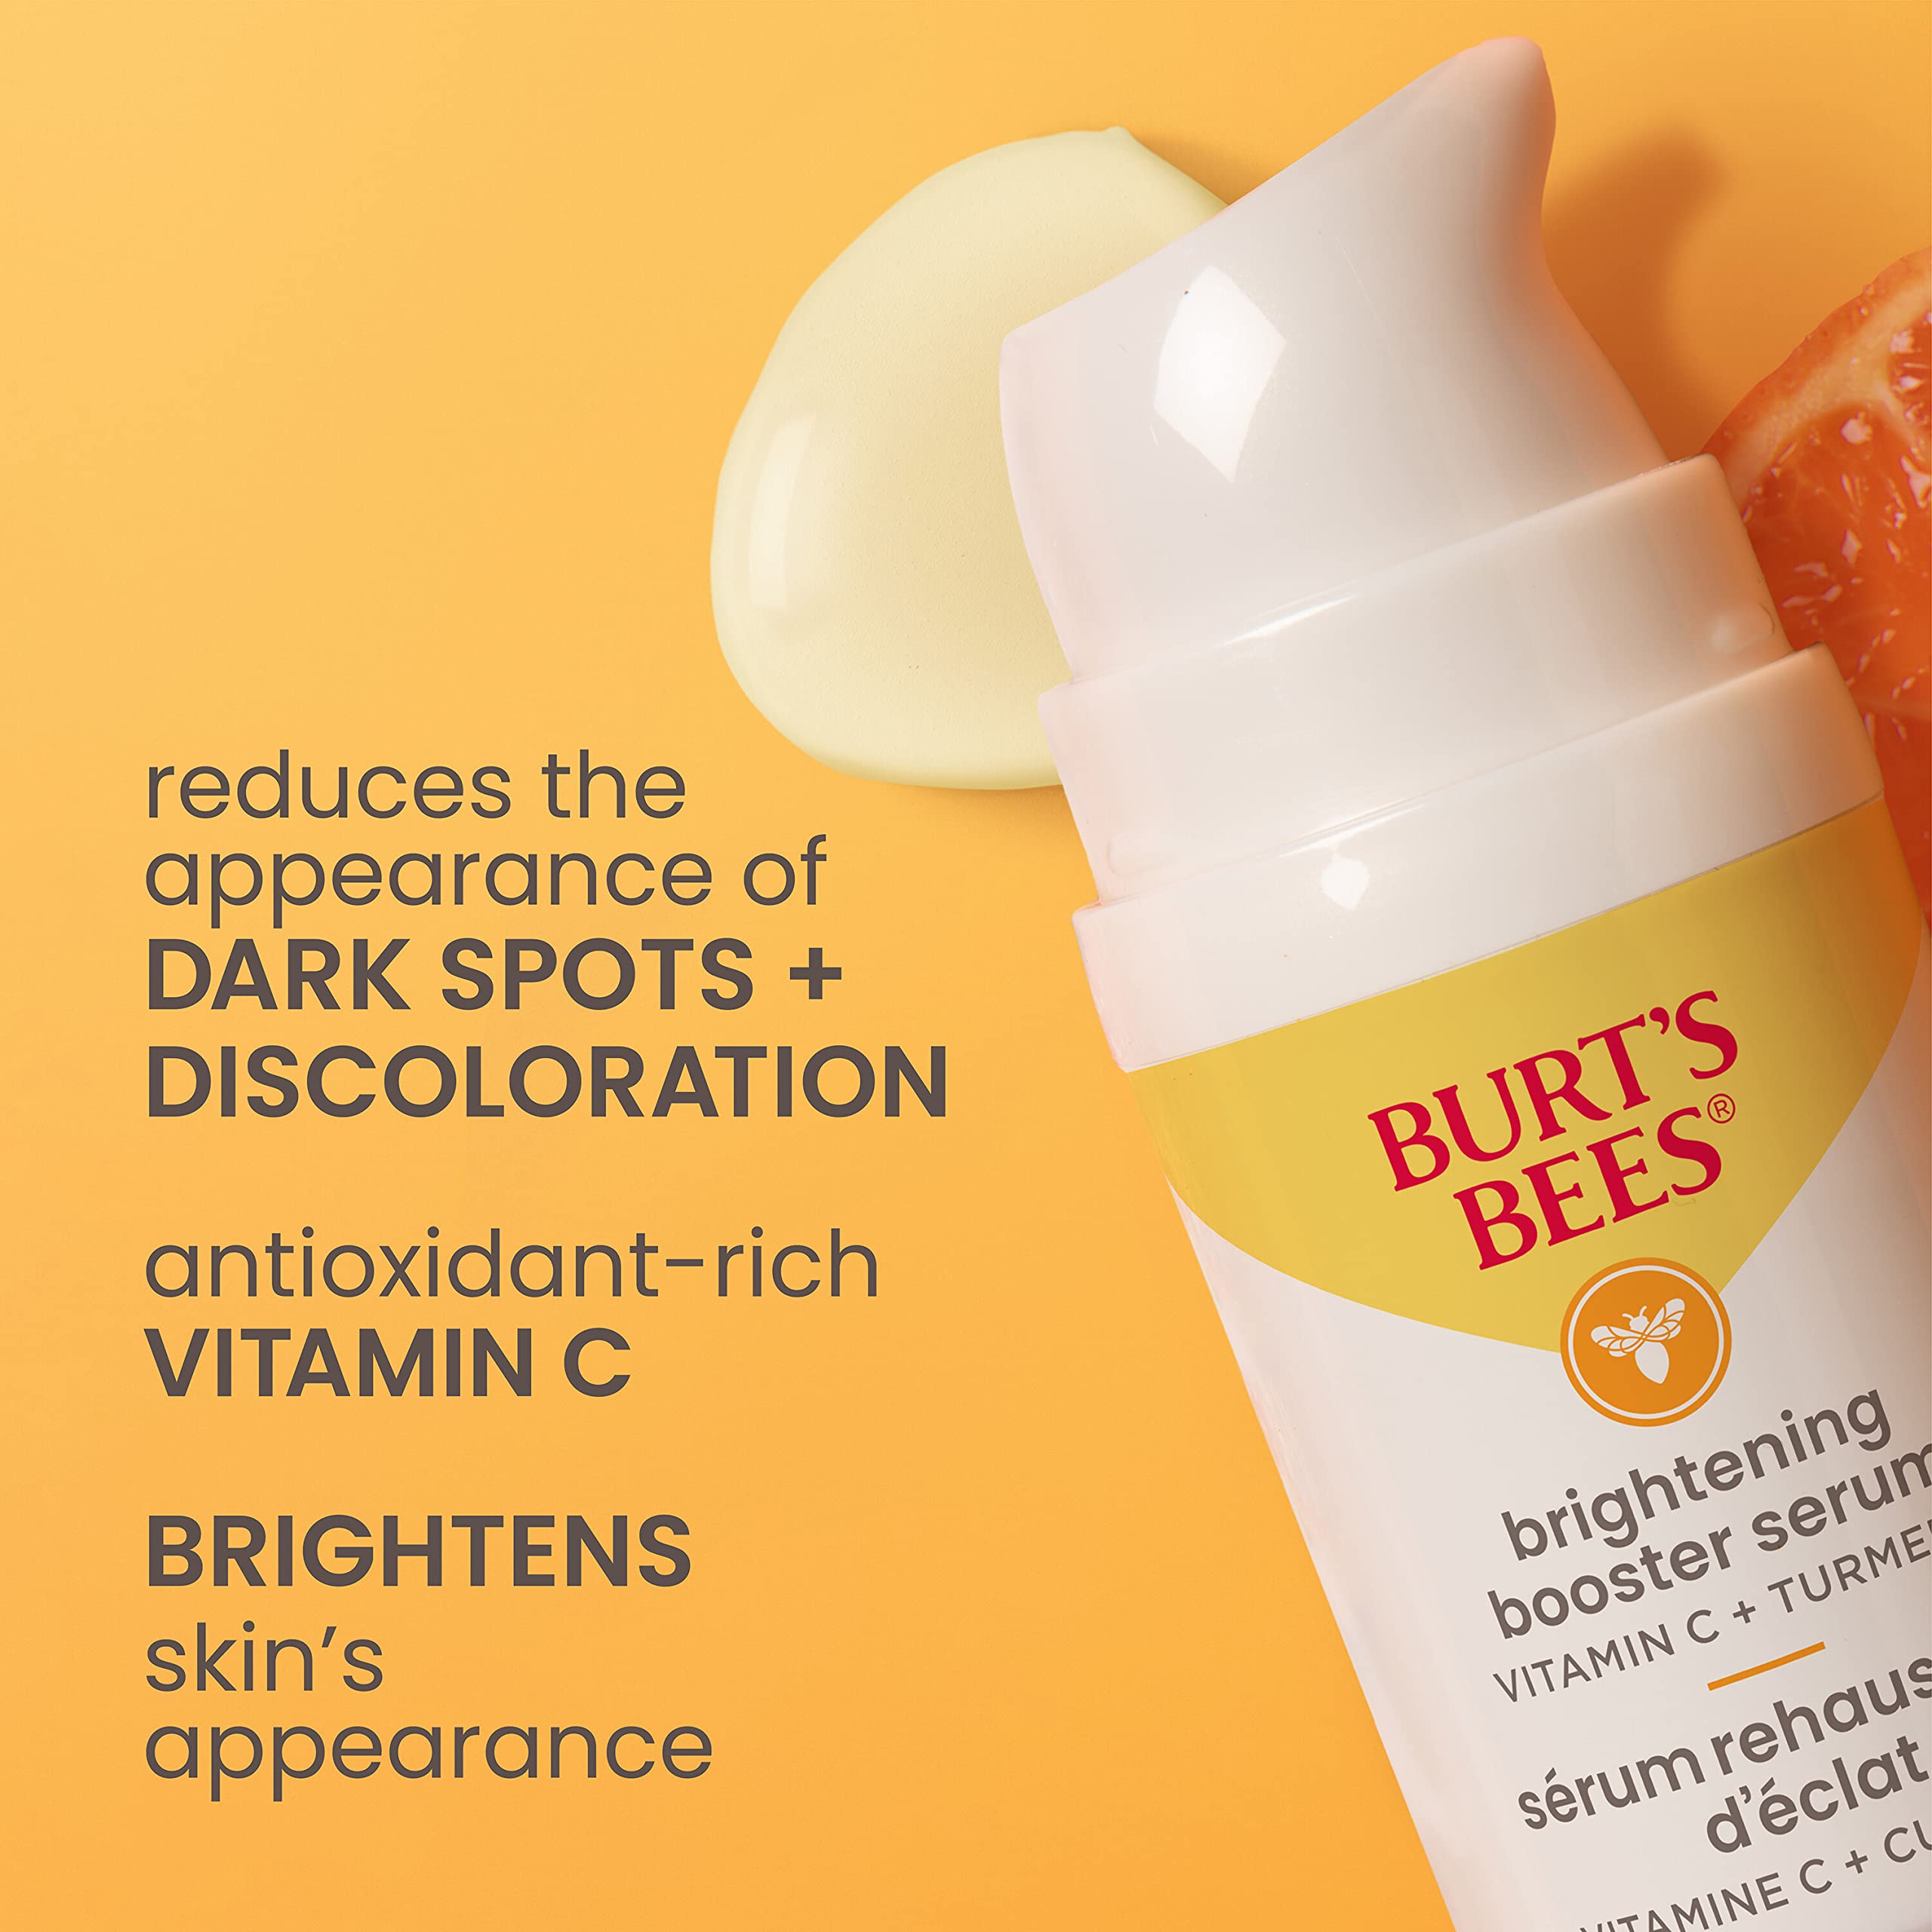 Burt's Bees Vitamin C Turmeric Face Serum, Brightens Skin & Visibly Reduces Dark Spots, Fine Lines & Wrinkles, Naturally Hydrating, Lightweight - Brightening Booster Serum (1 oz)